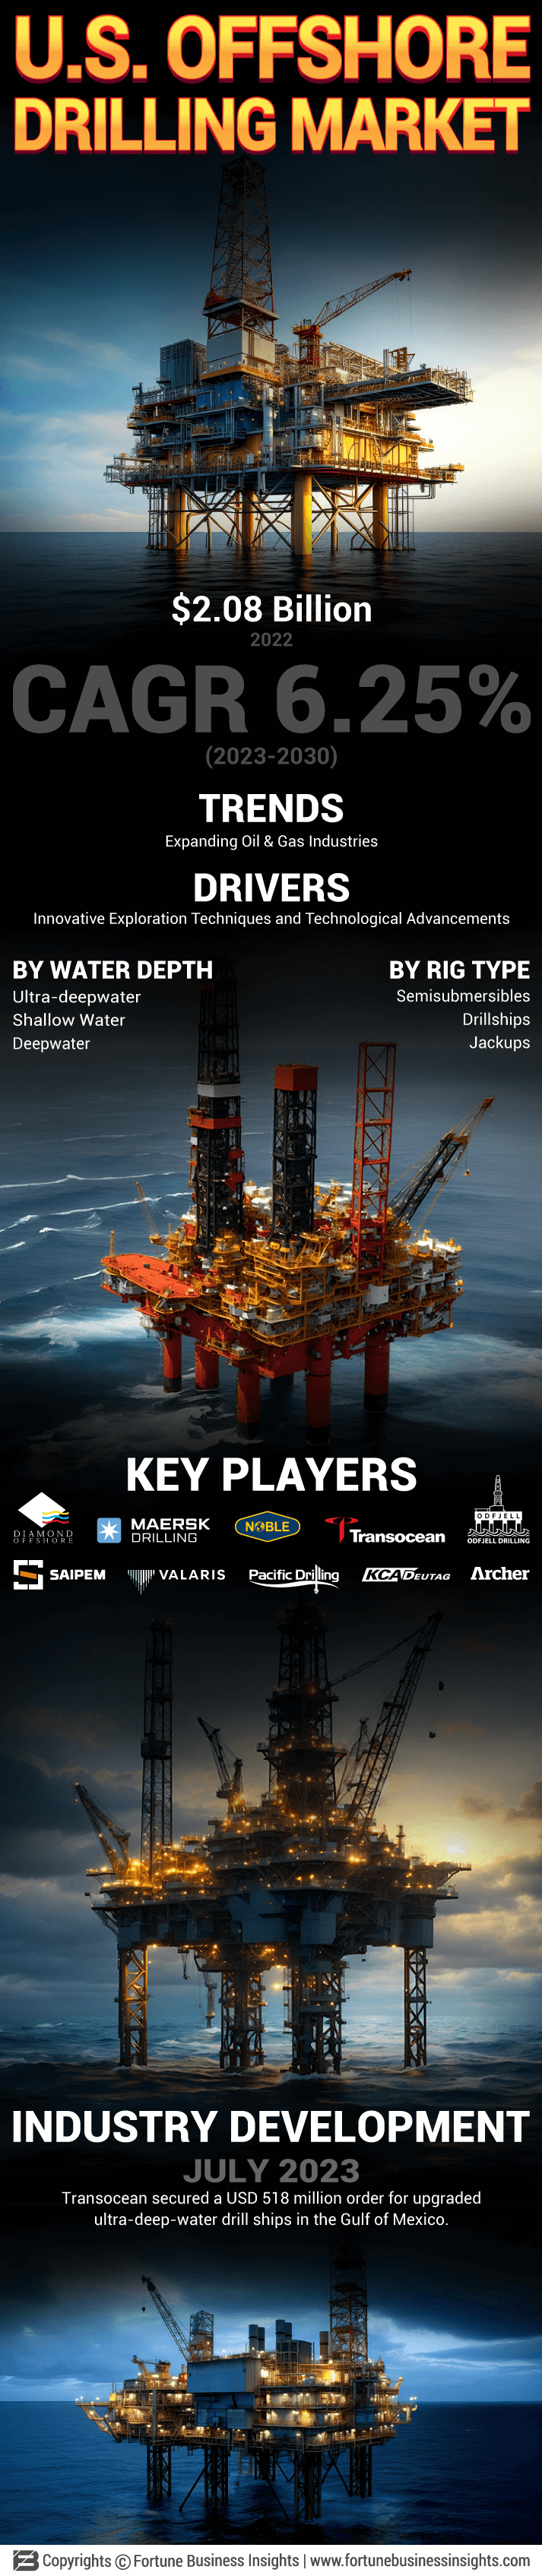 U.S. Offshore Drilling Market